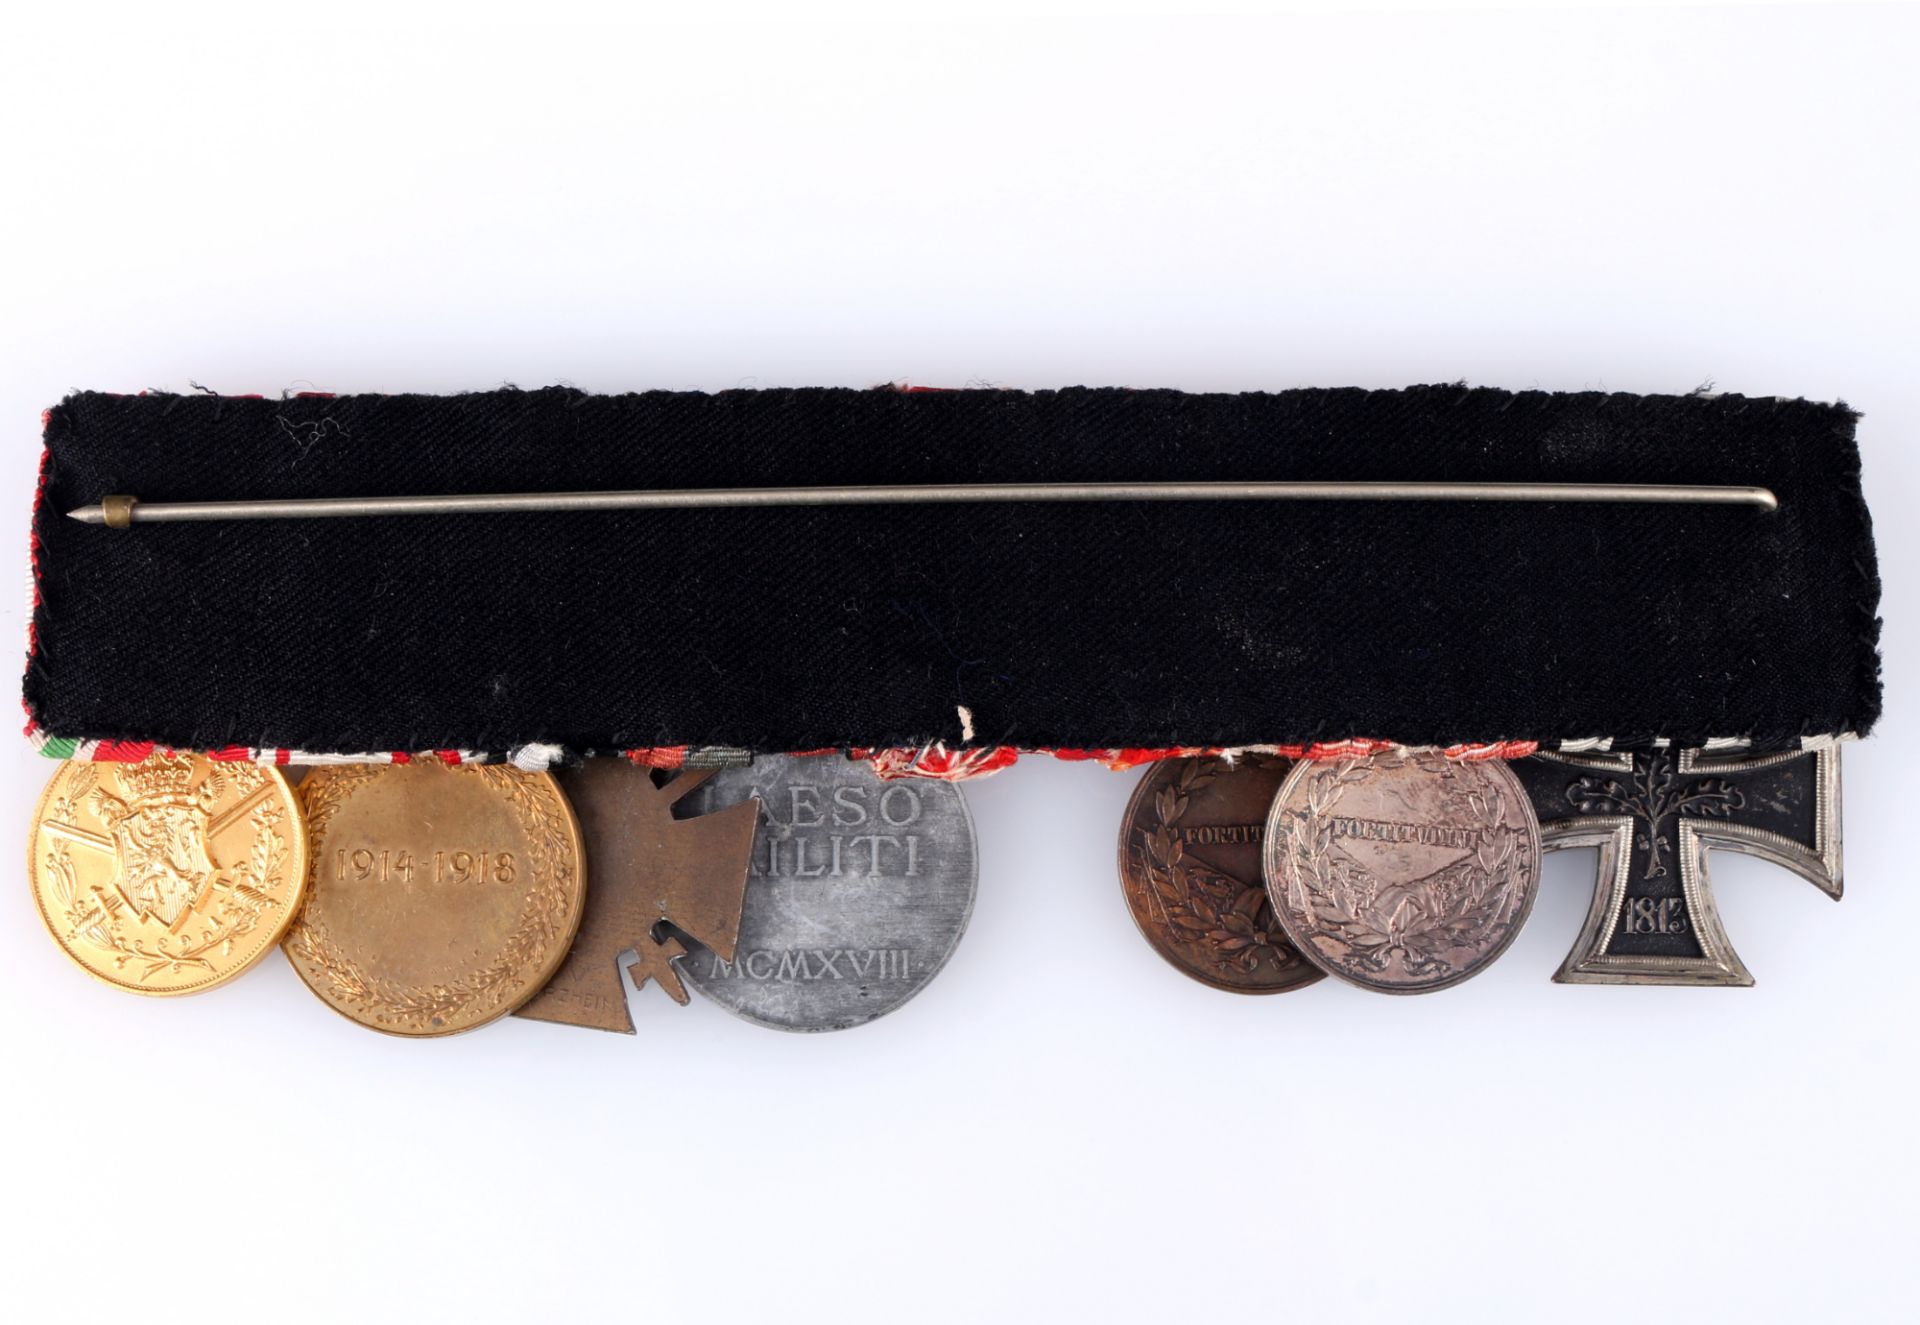 Große Ordensspange mit 7 preussischen Orden, buckle with 7 prussian medals, - Image 2 of 2